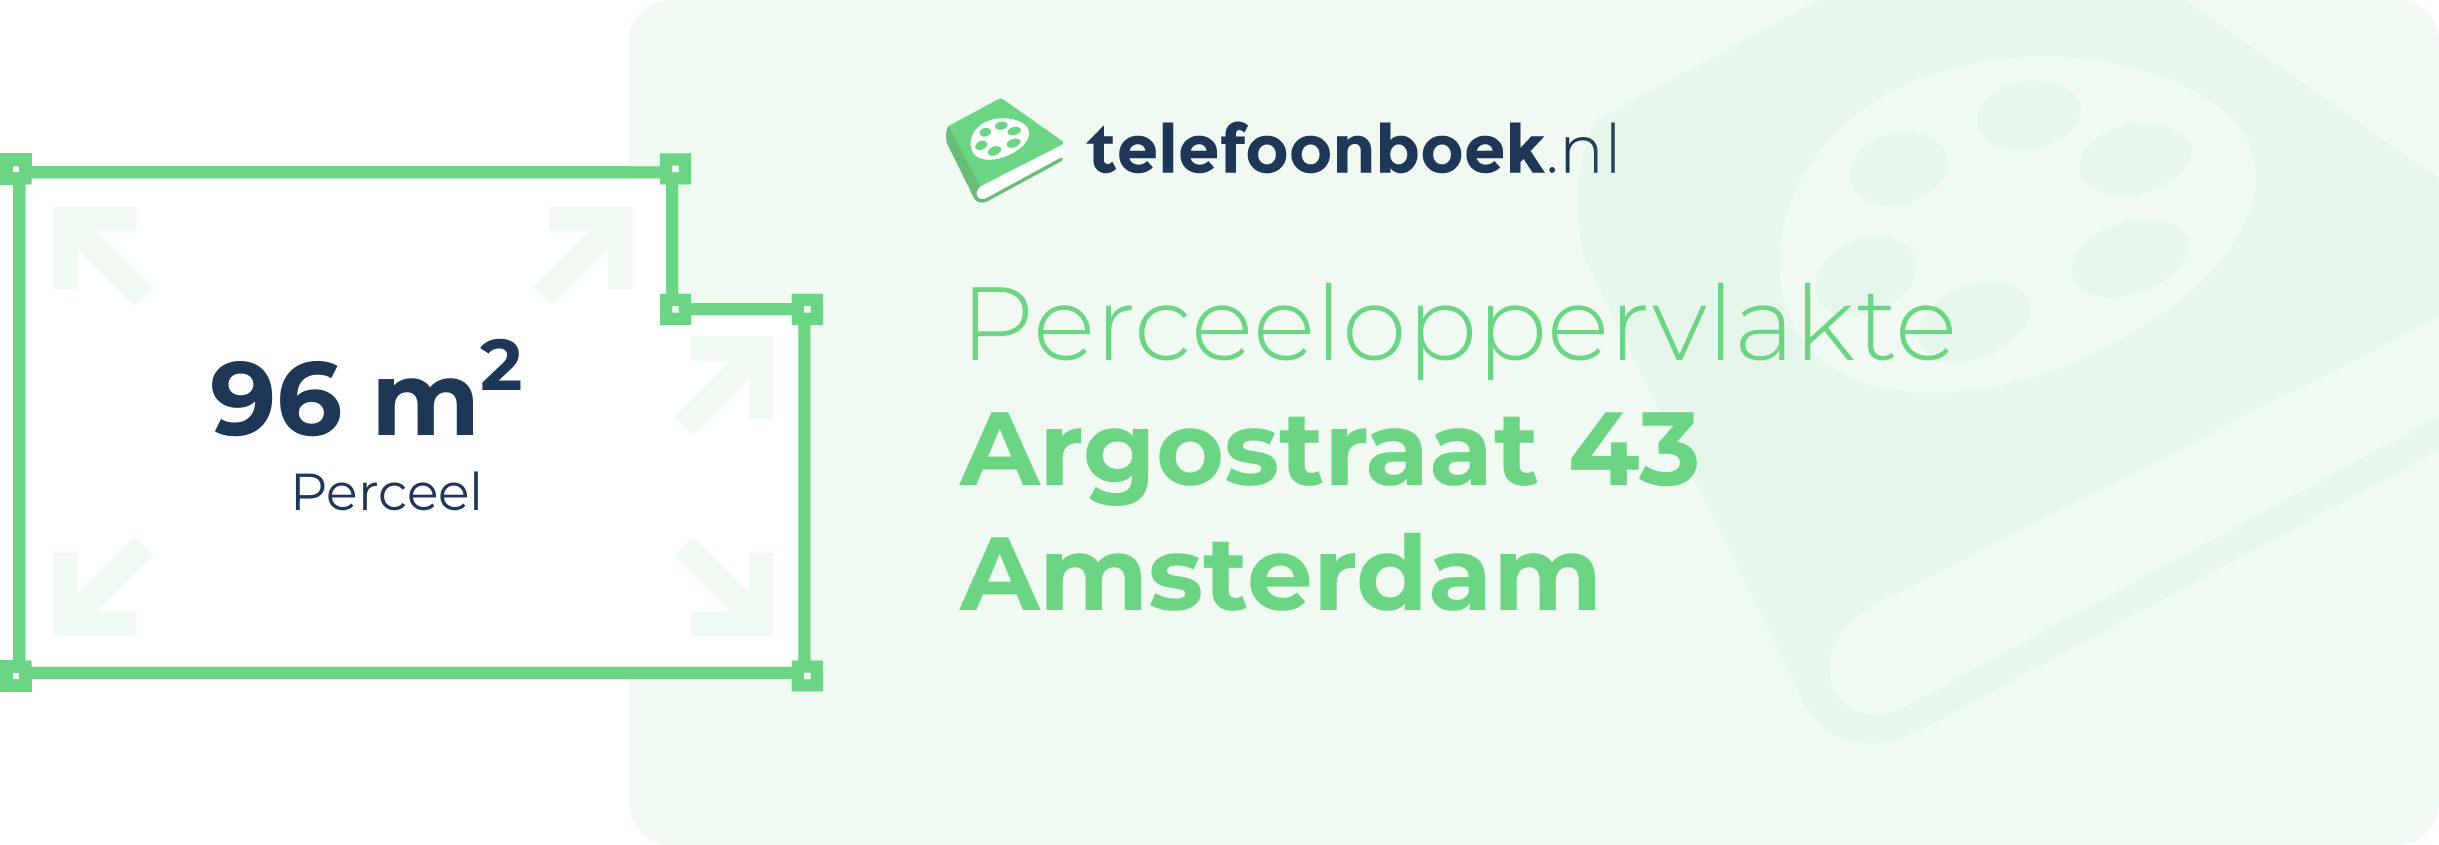 Perceeloppervlakte Argostraat 43 Amsterdam